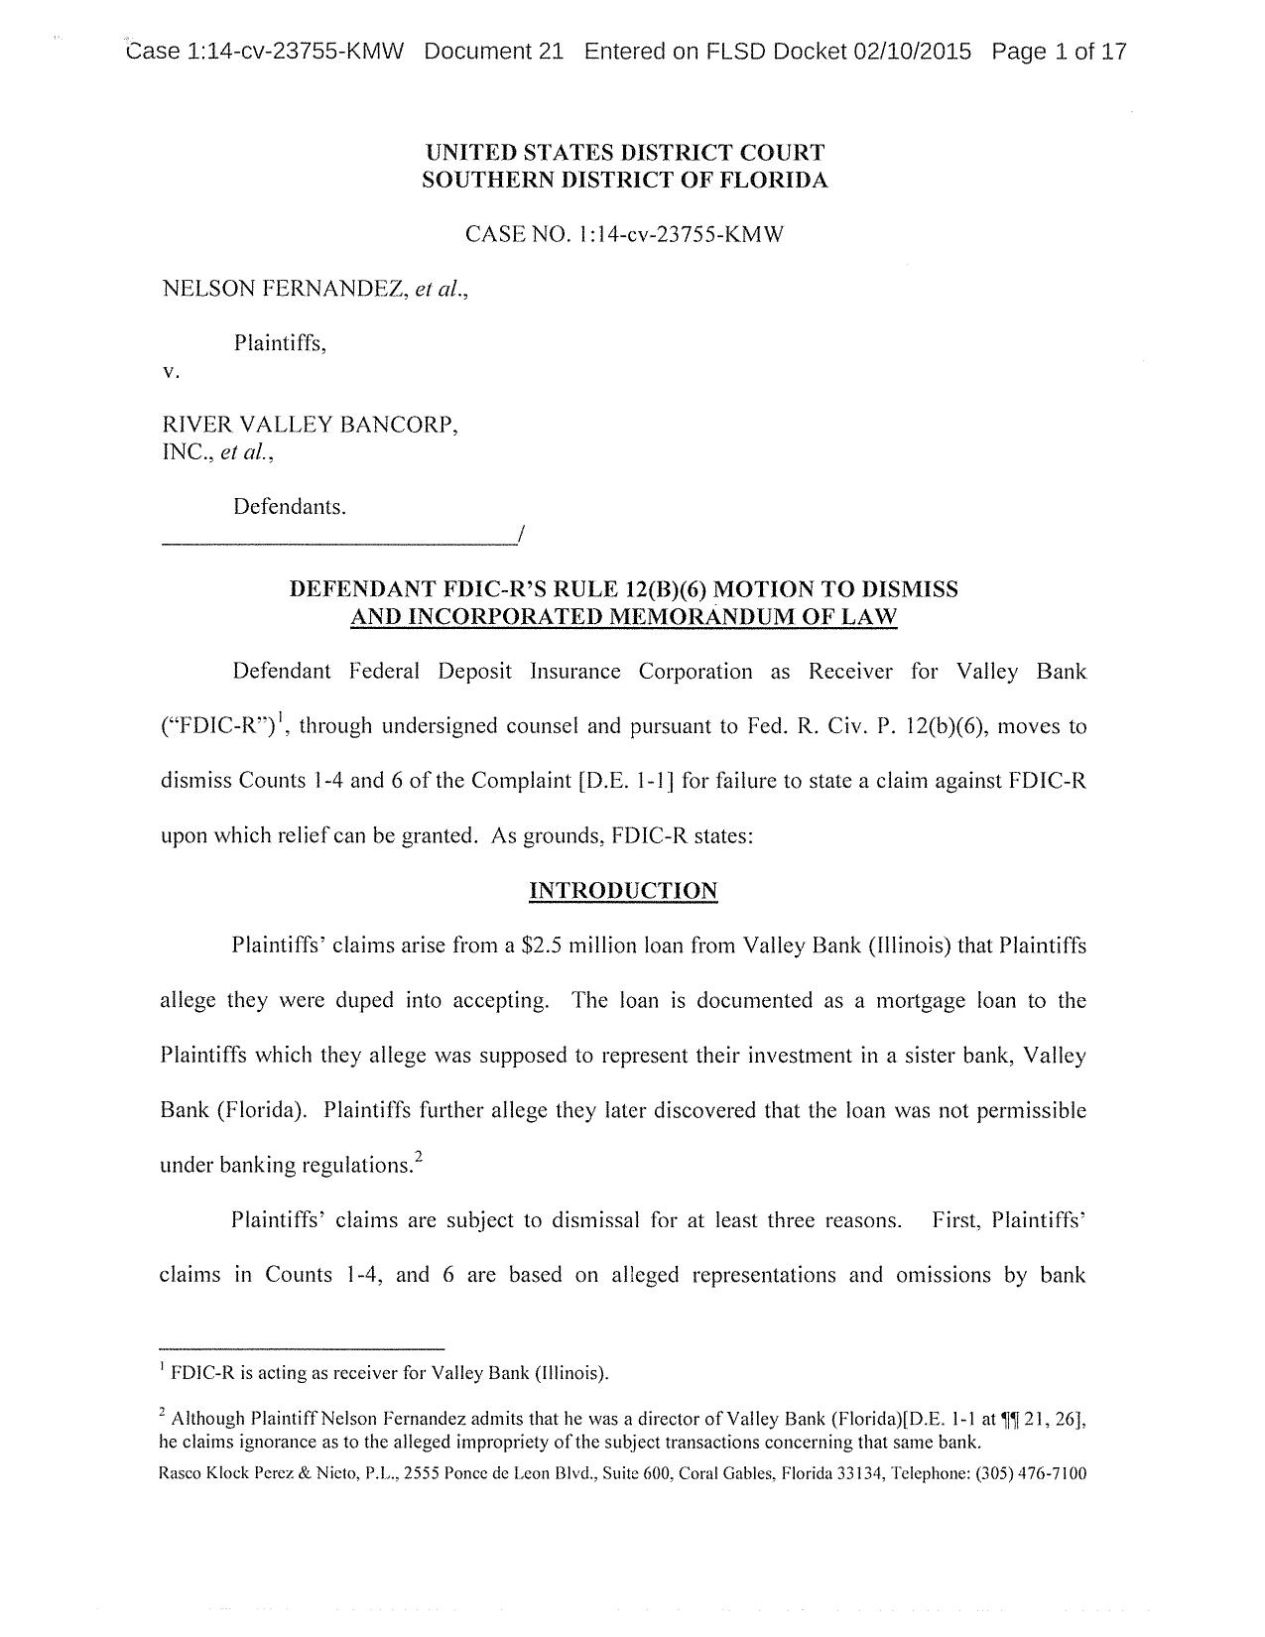 motion to dismiss wrong defendant florida